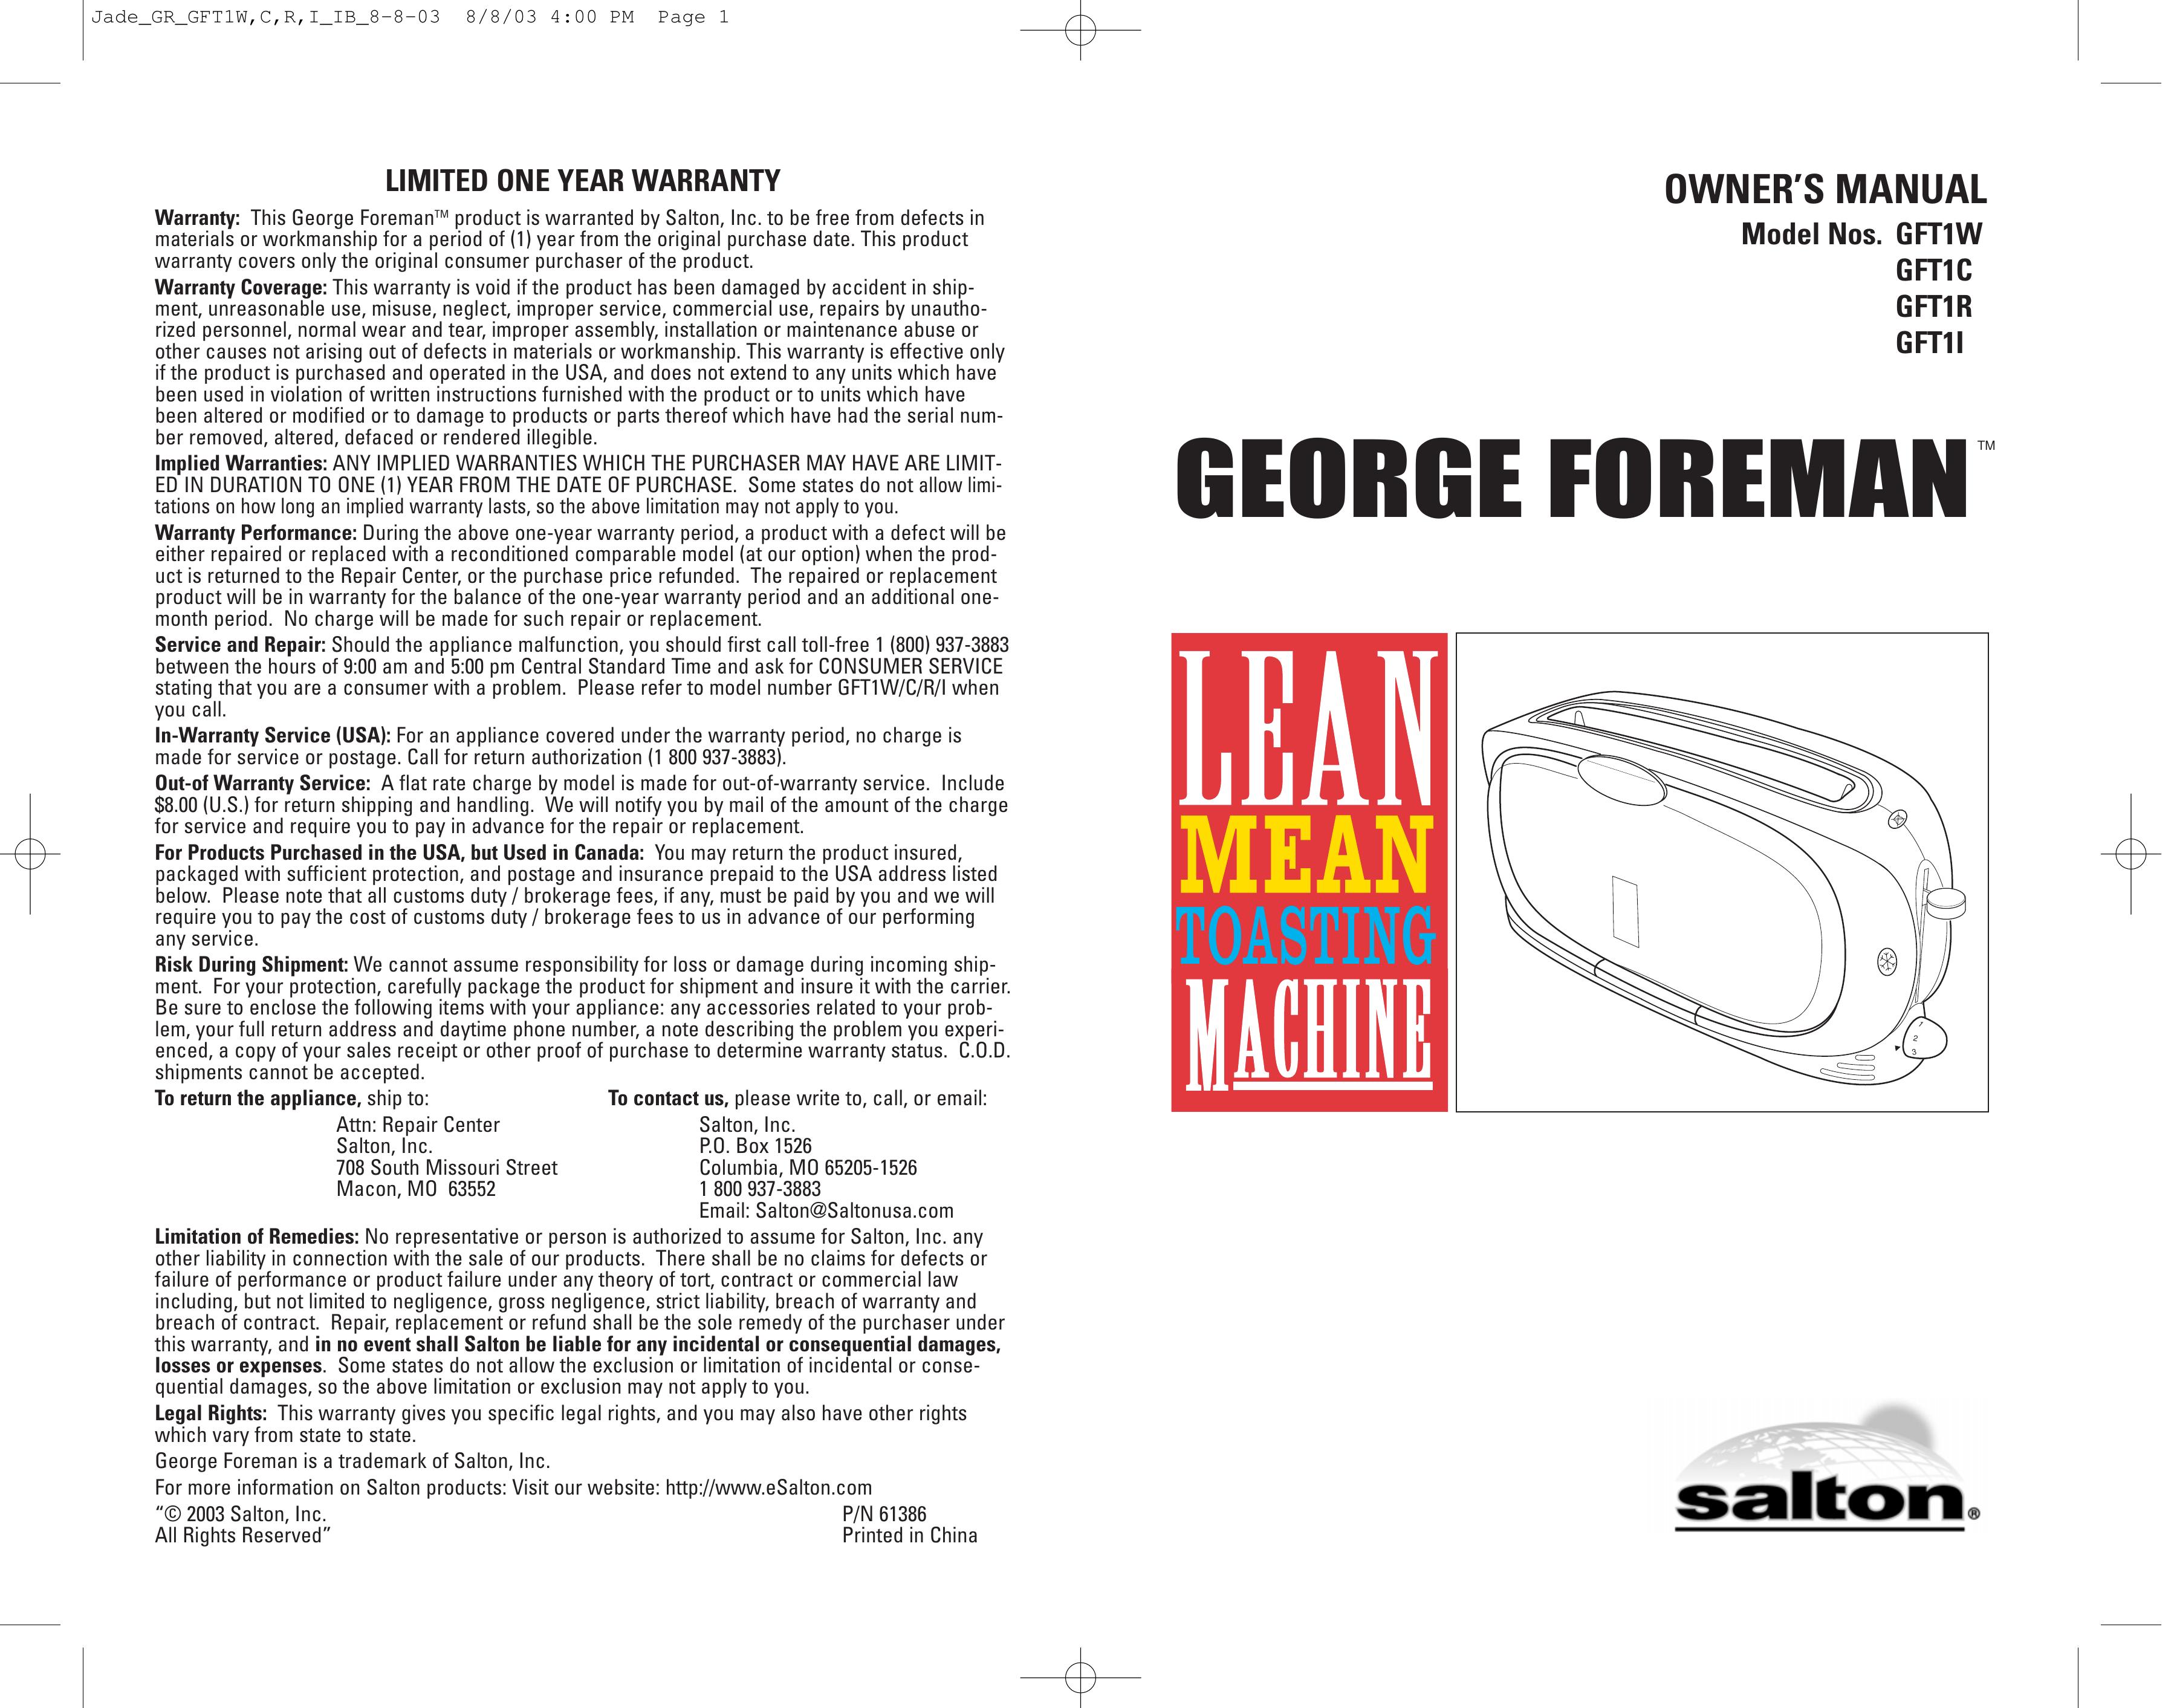 George Foreman GFT1I Toaster User Manual